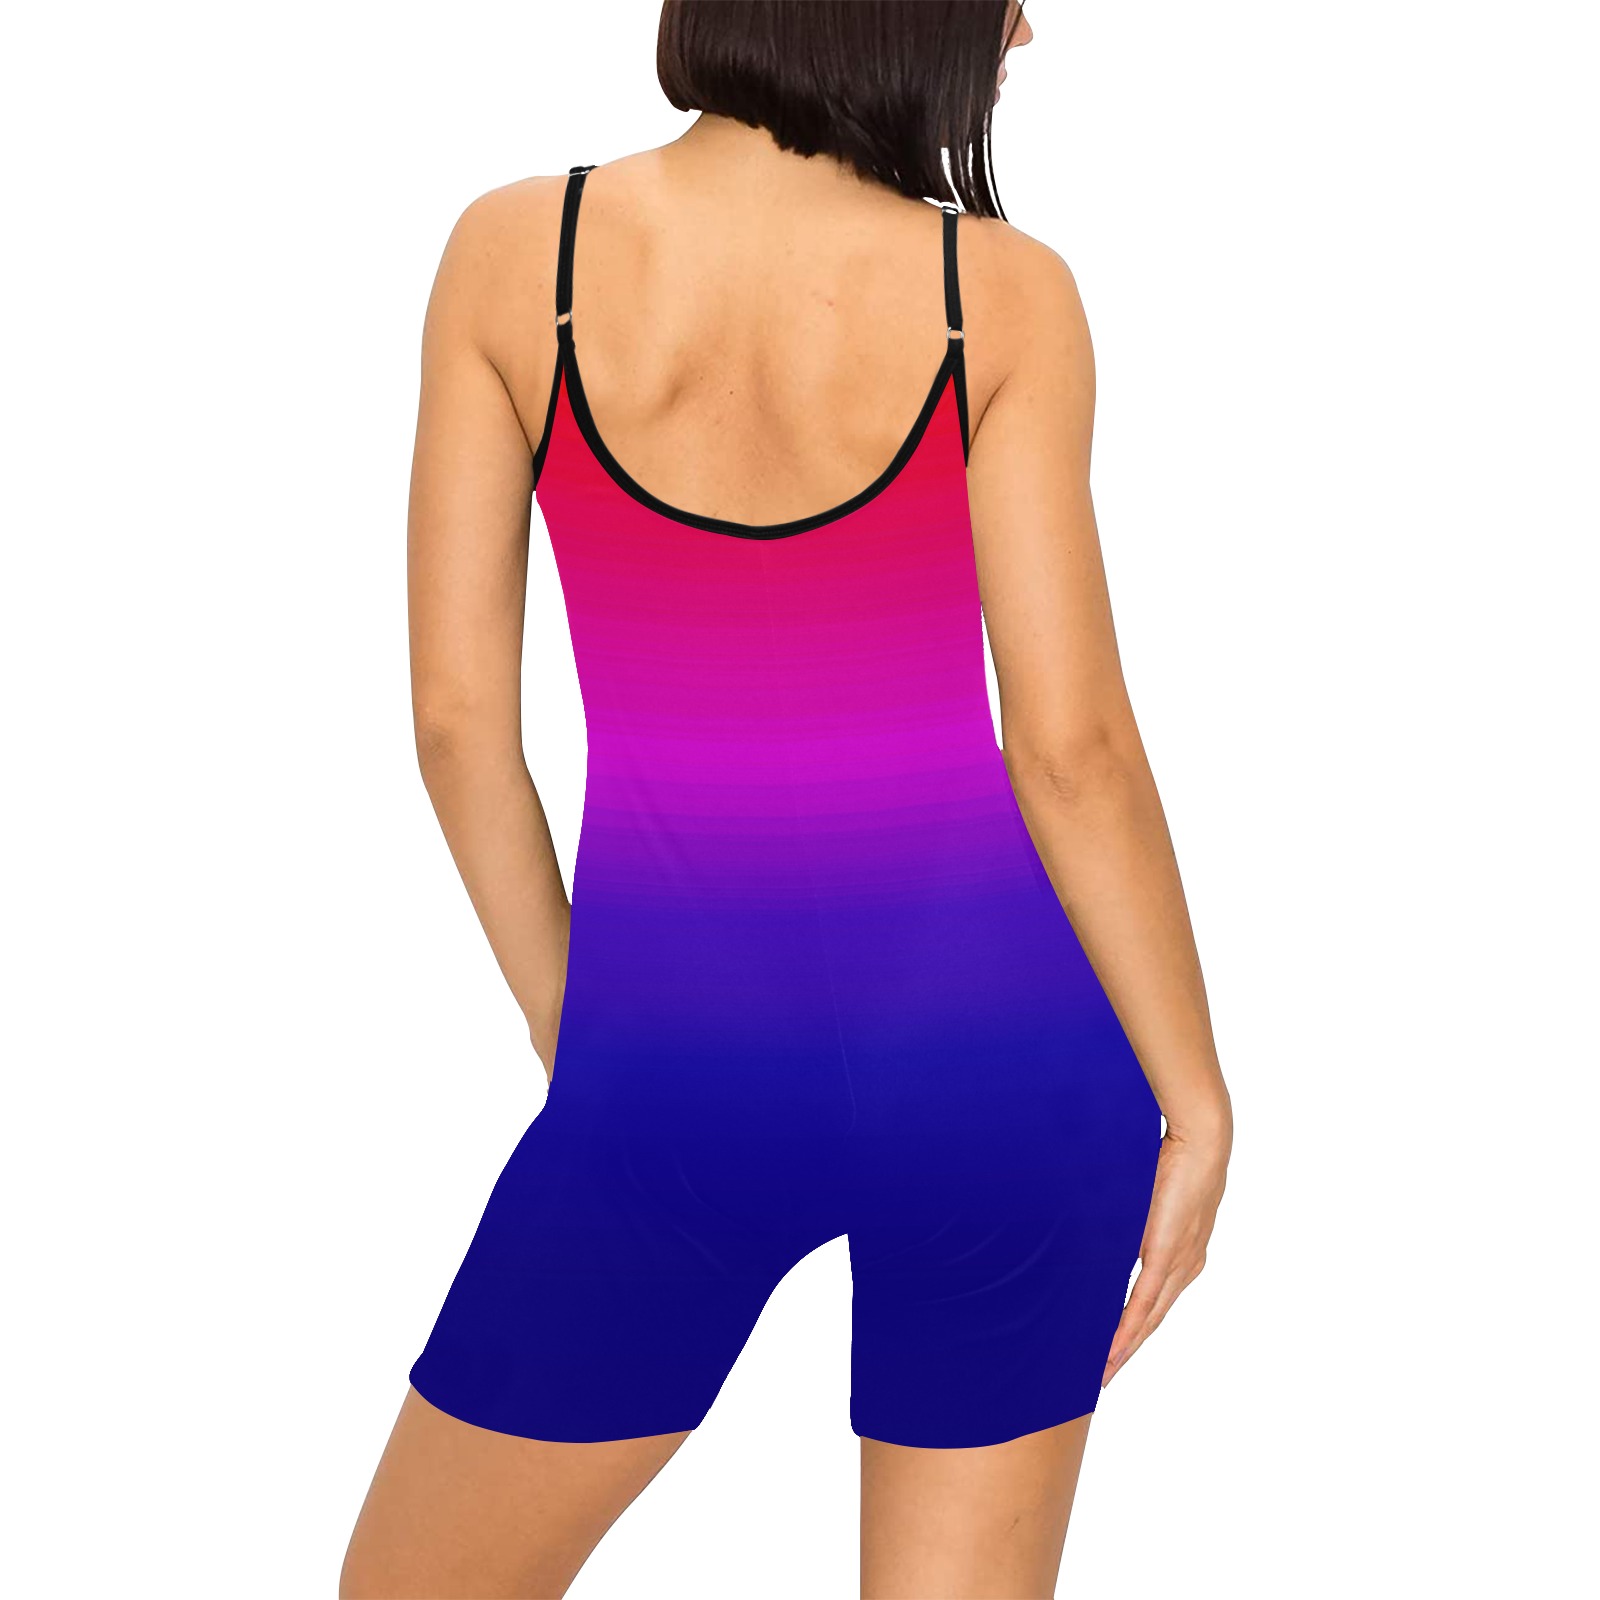 pink and blue Women's Short Yoga Bodysuit